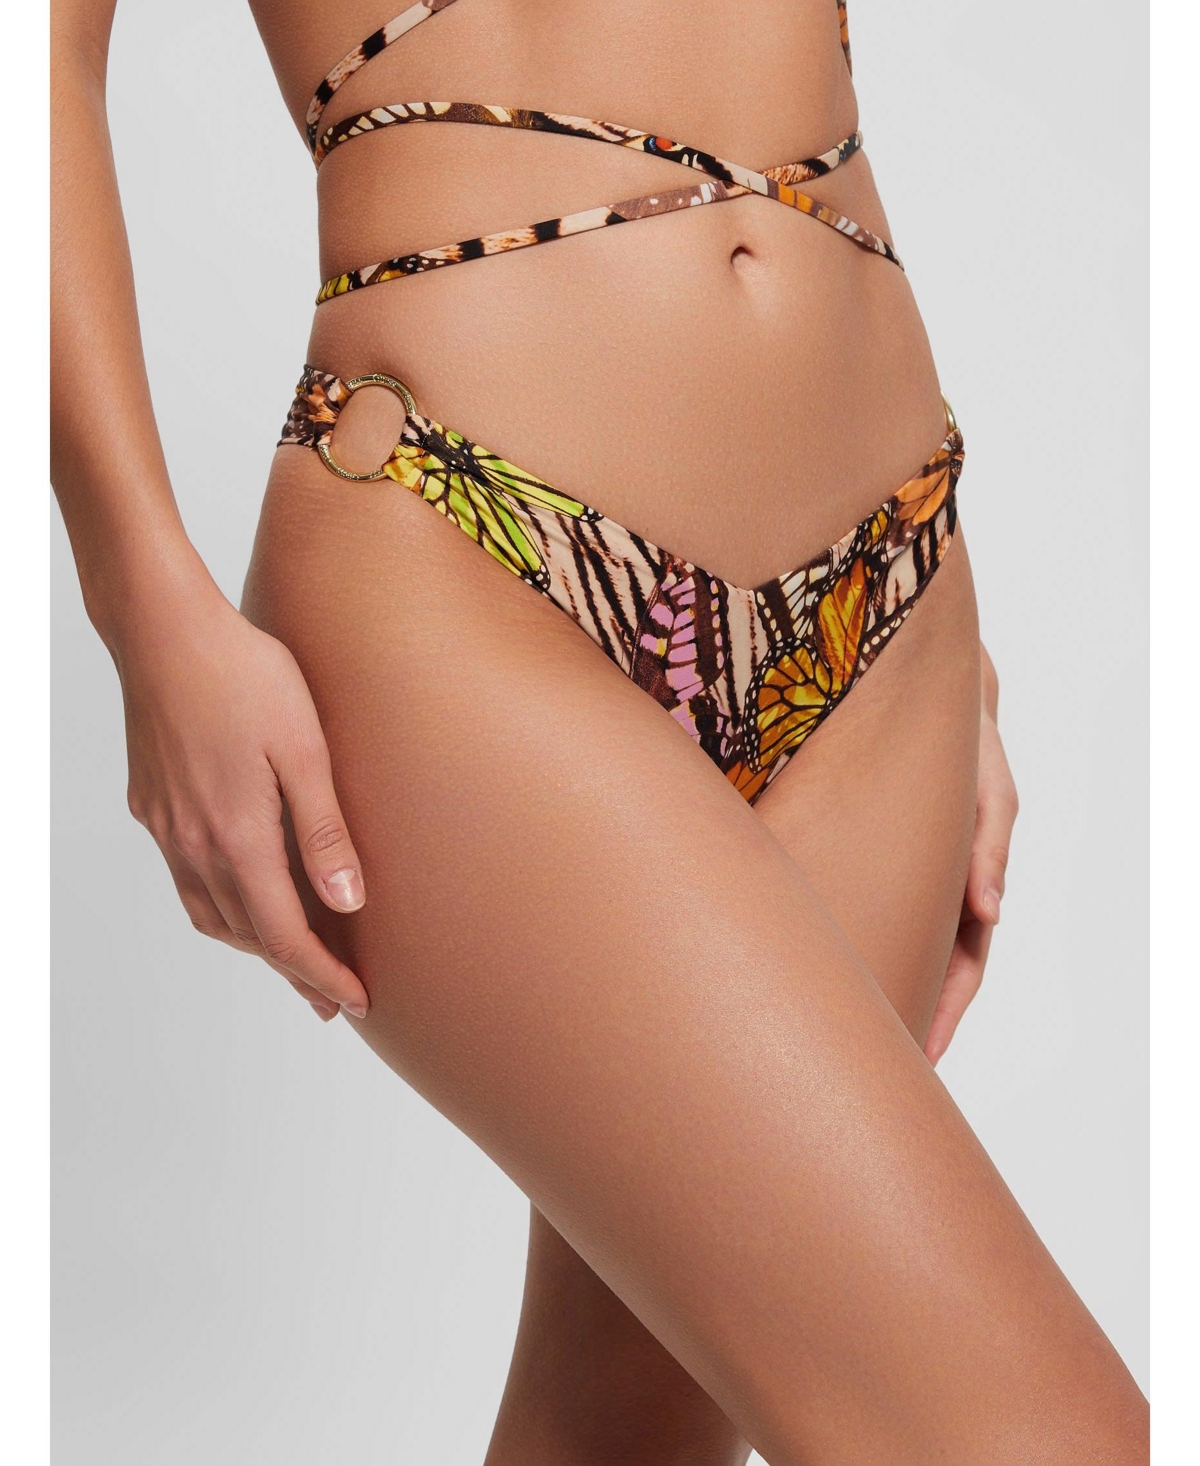 Women's Eco Brazilian Bikini Bottoms - Tigerfly small